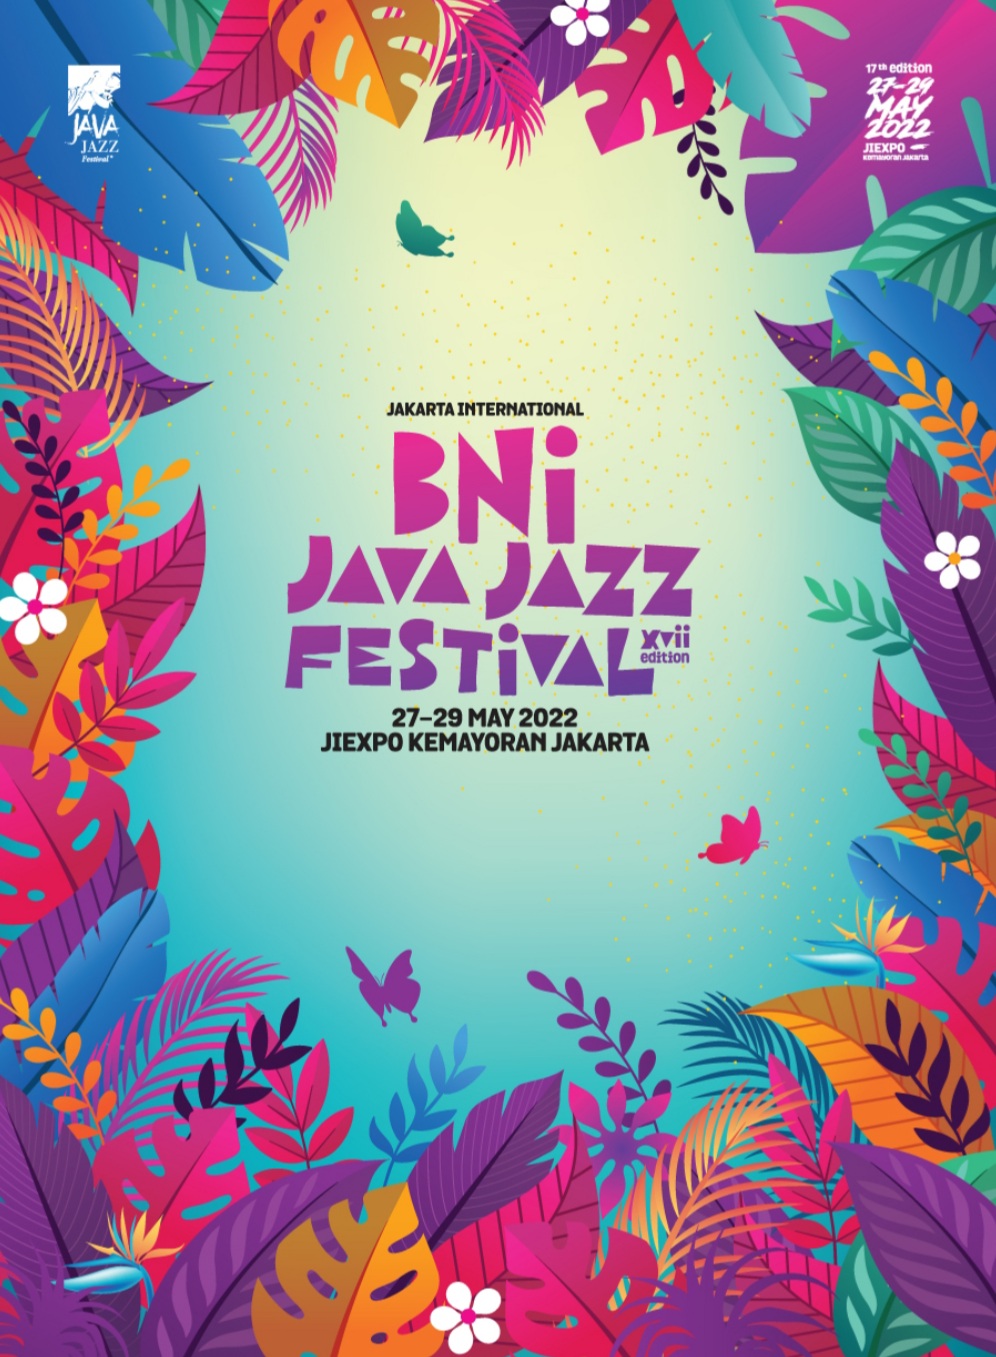 Sempat Terhenti, Java Jazz Festival Kembali Digelar Mei 2022